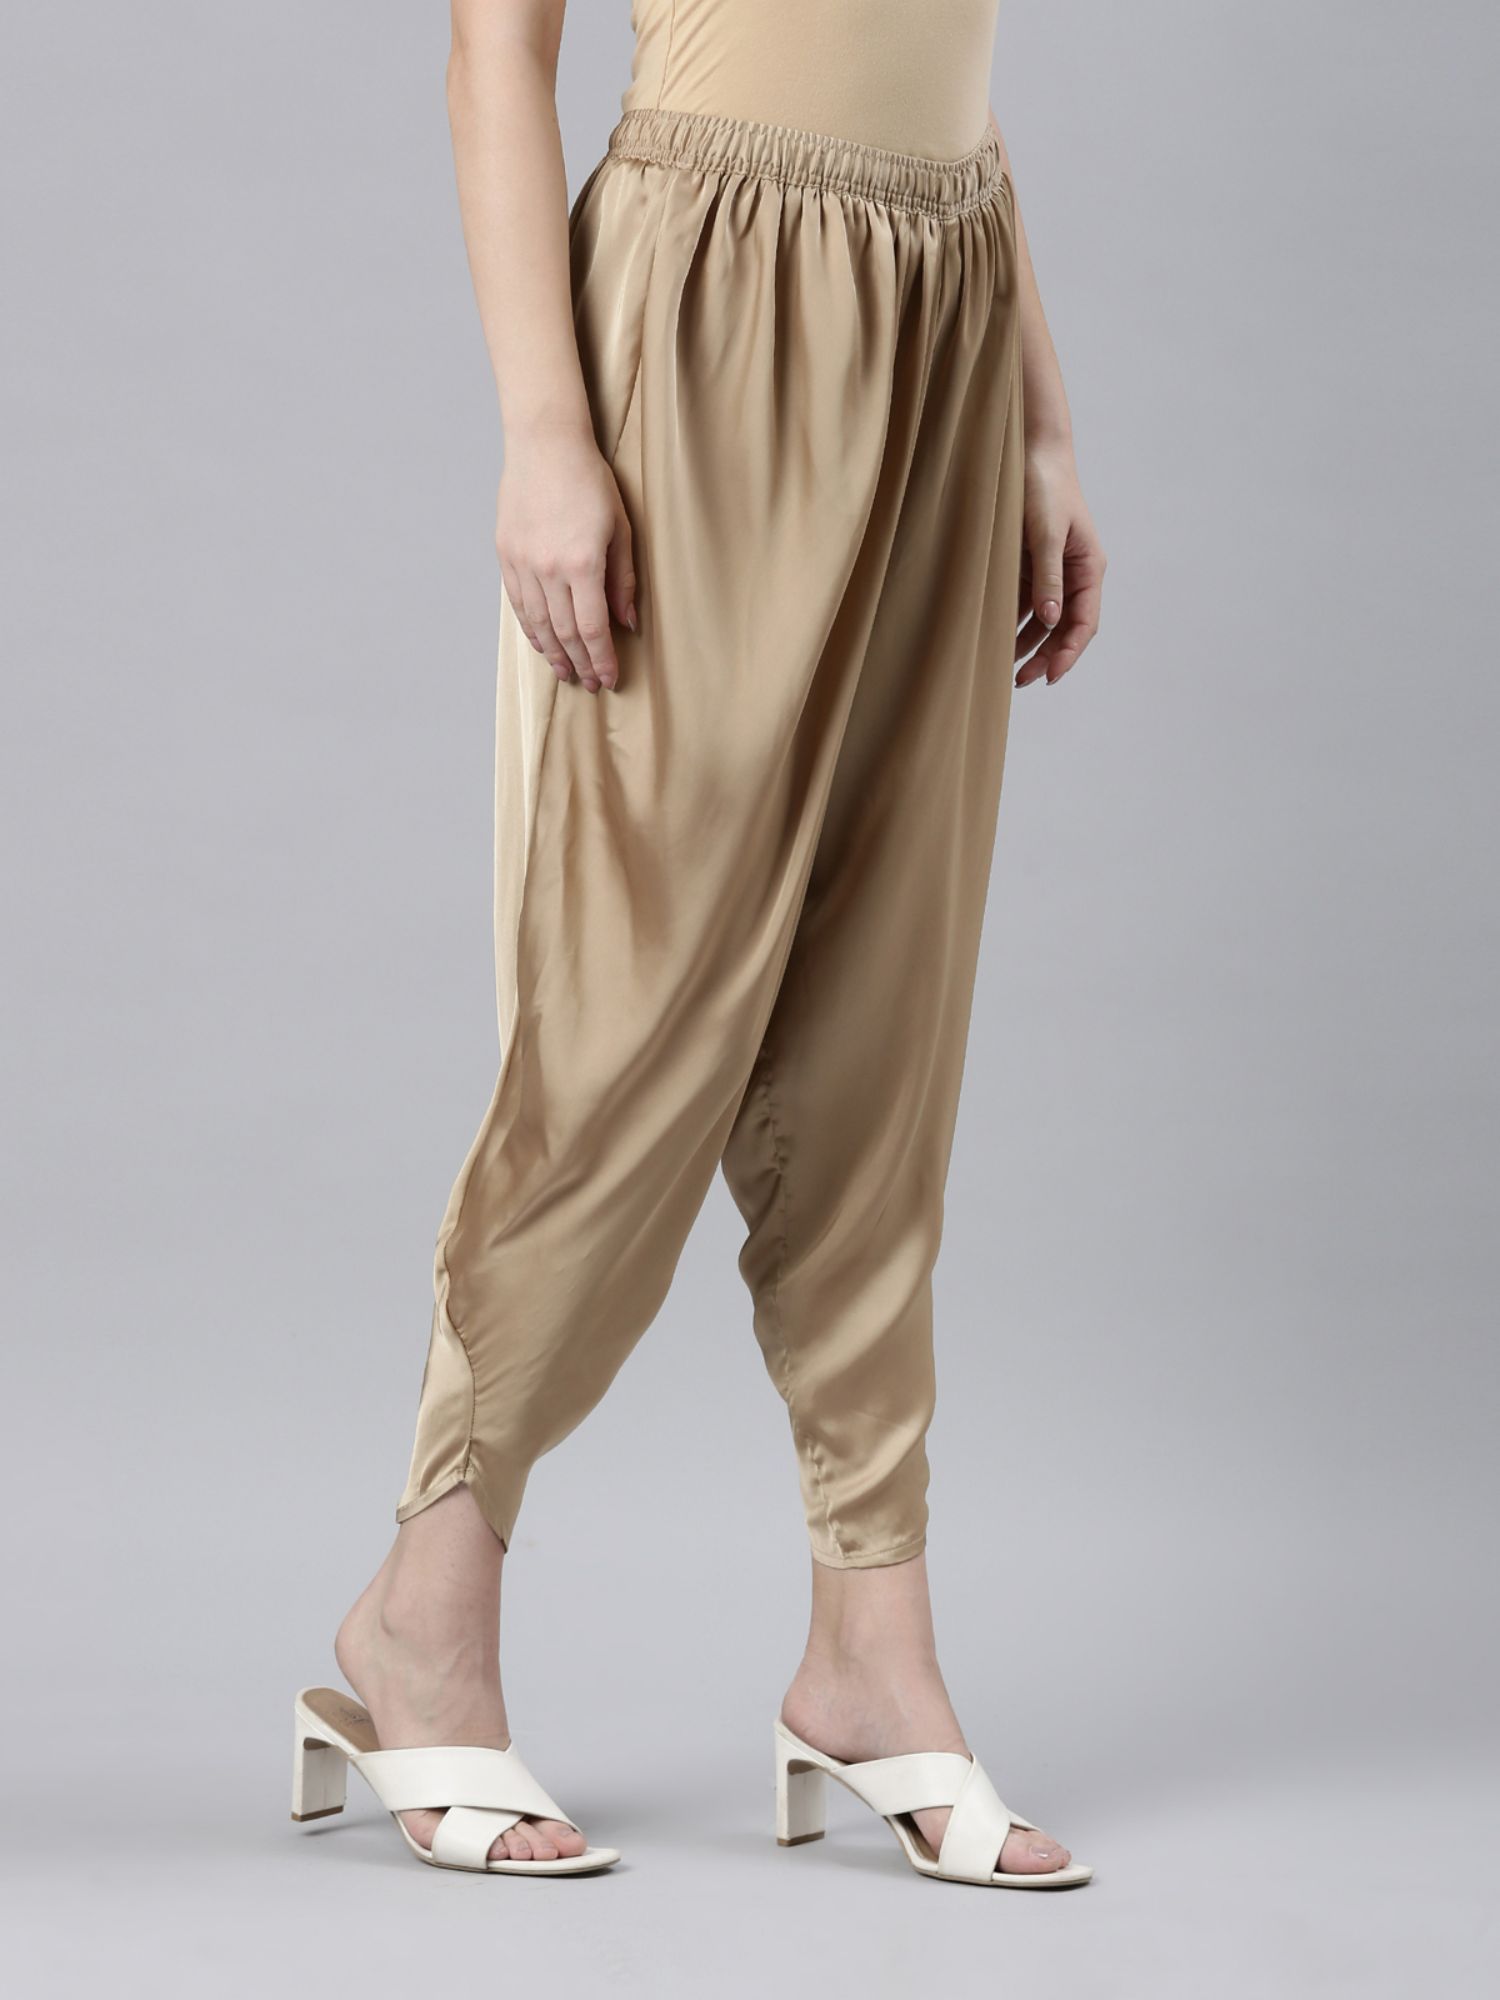 Buy Ivory Pants for Women by Indya Online  Ajiocom